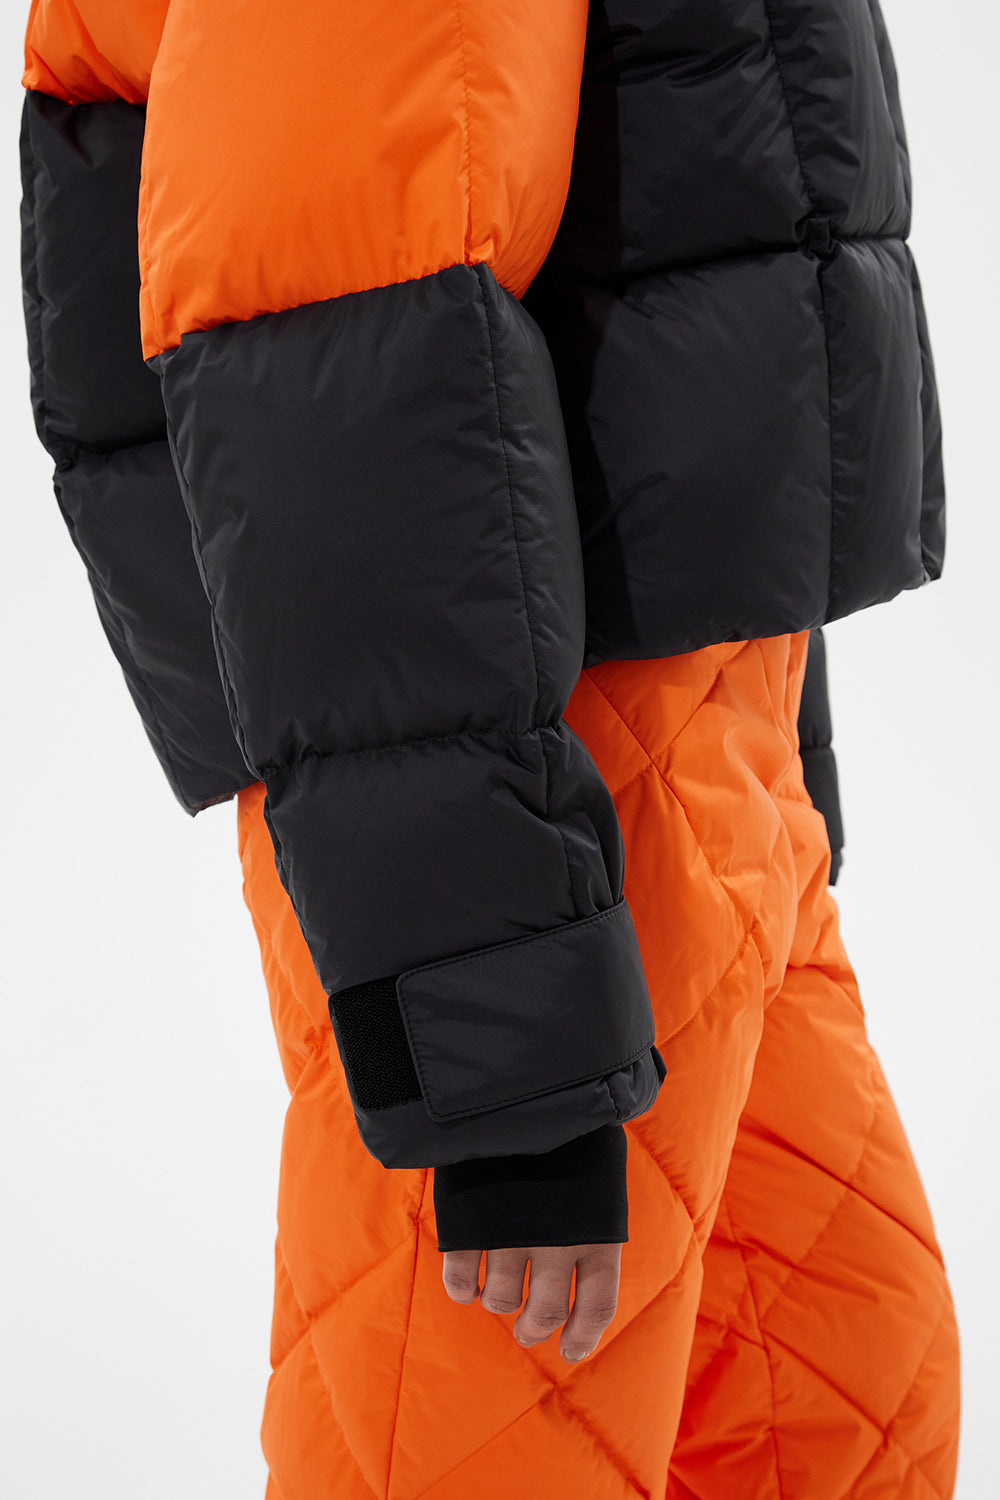 Apres Ski Wendy Jacket Tec Orange + Tec Black